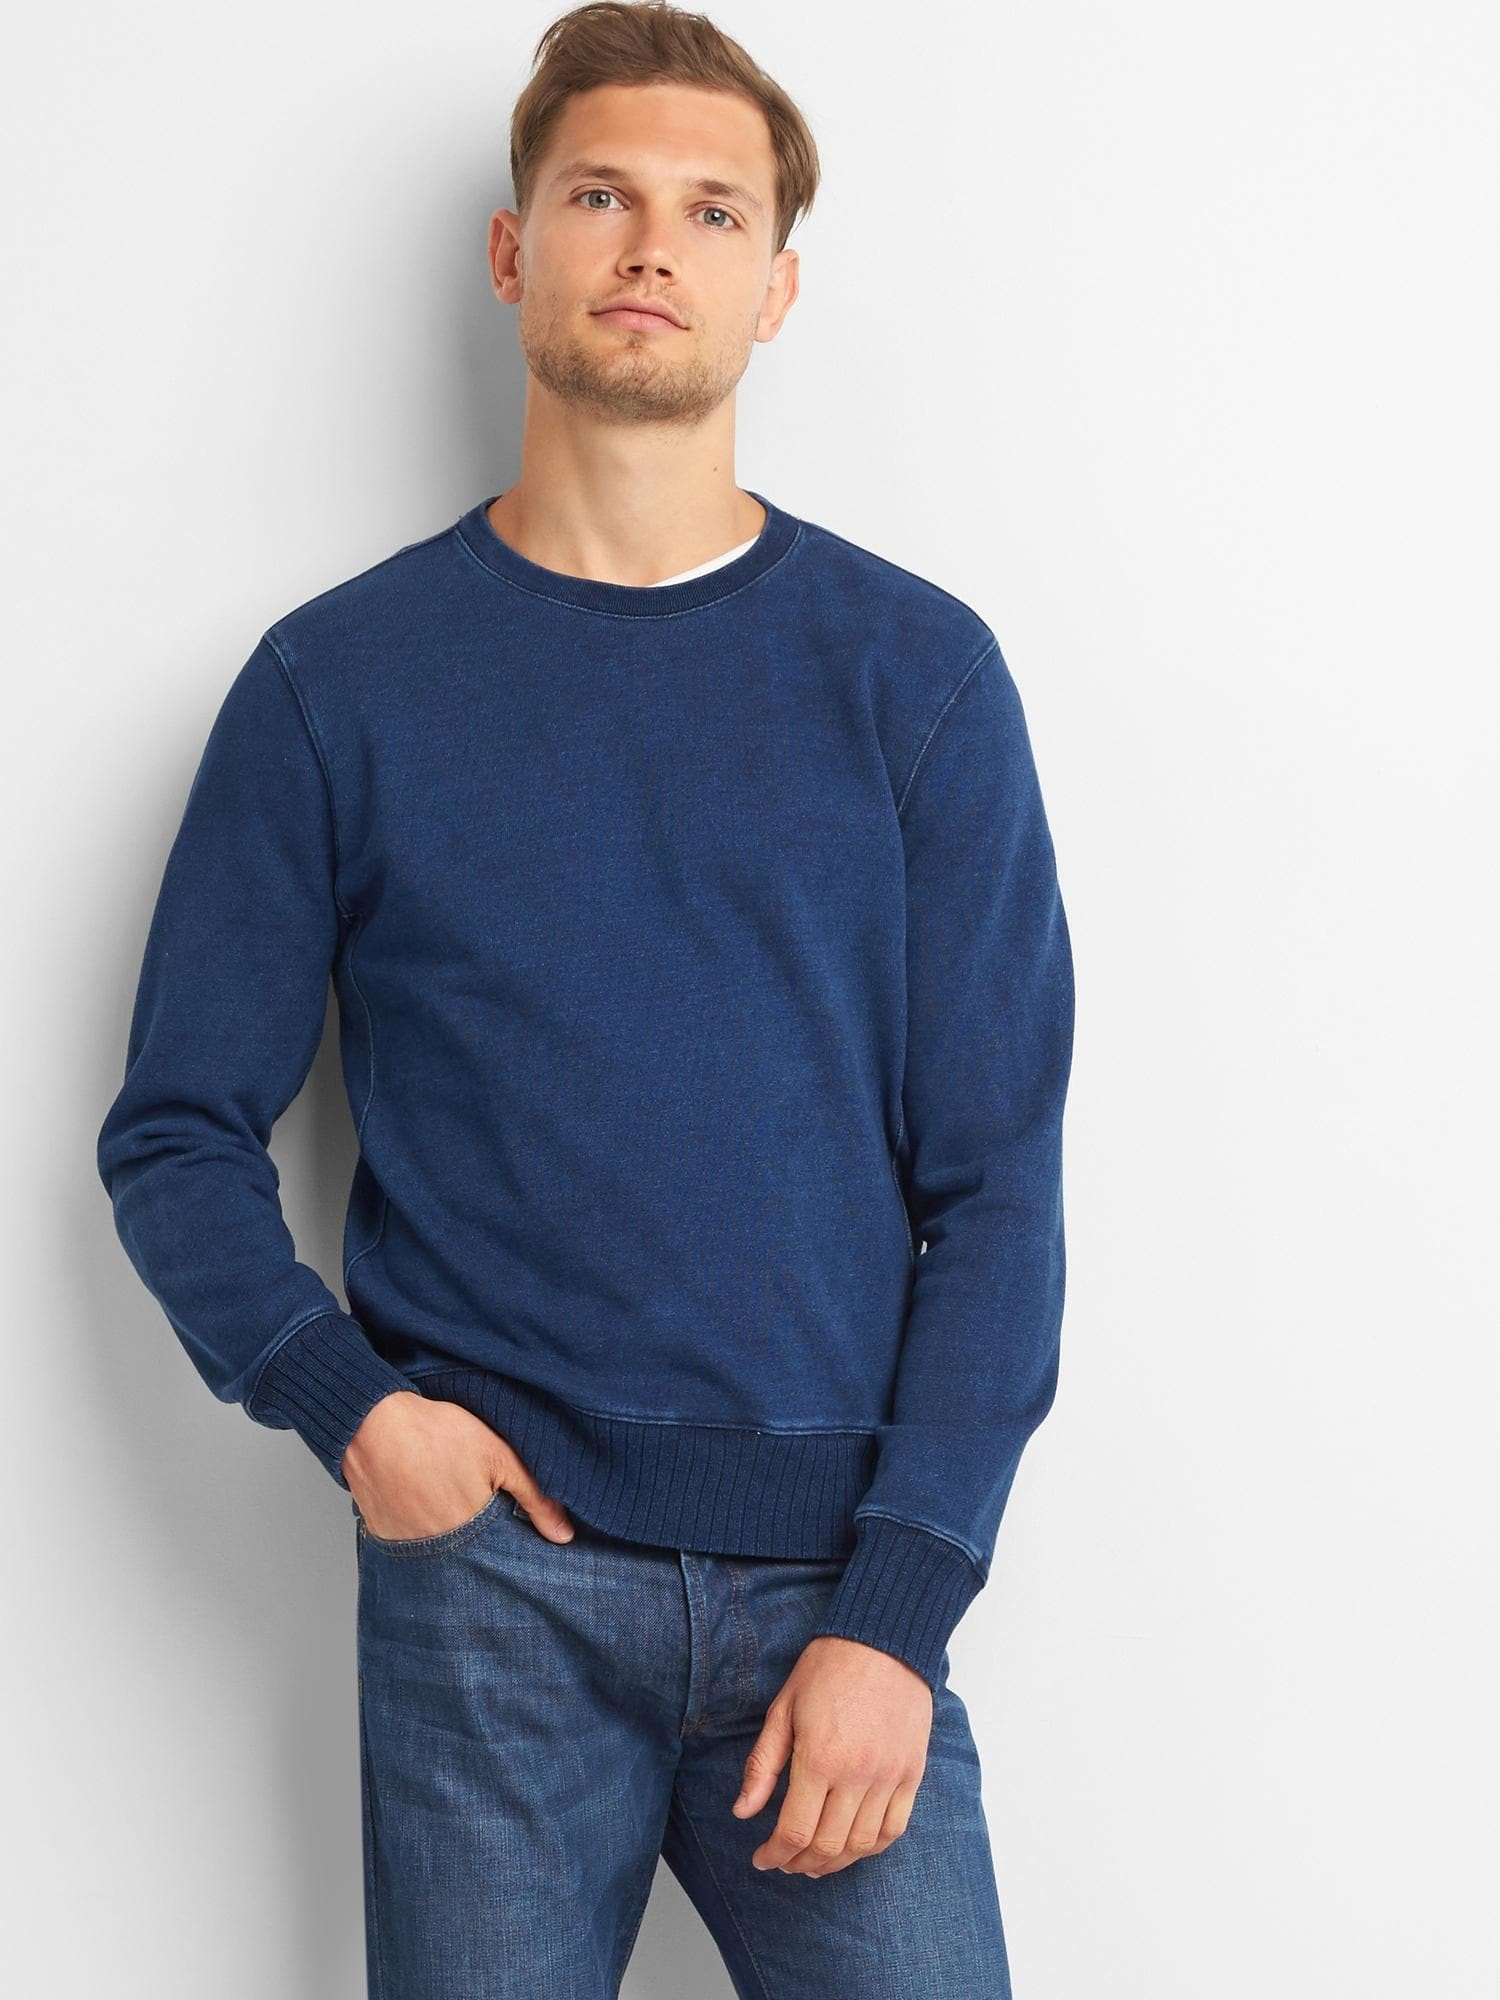 Indigo sıfır yaka sweatshirt product image